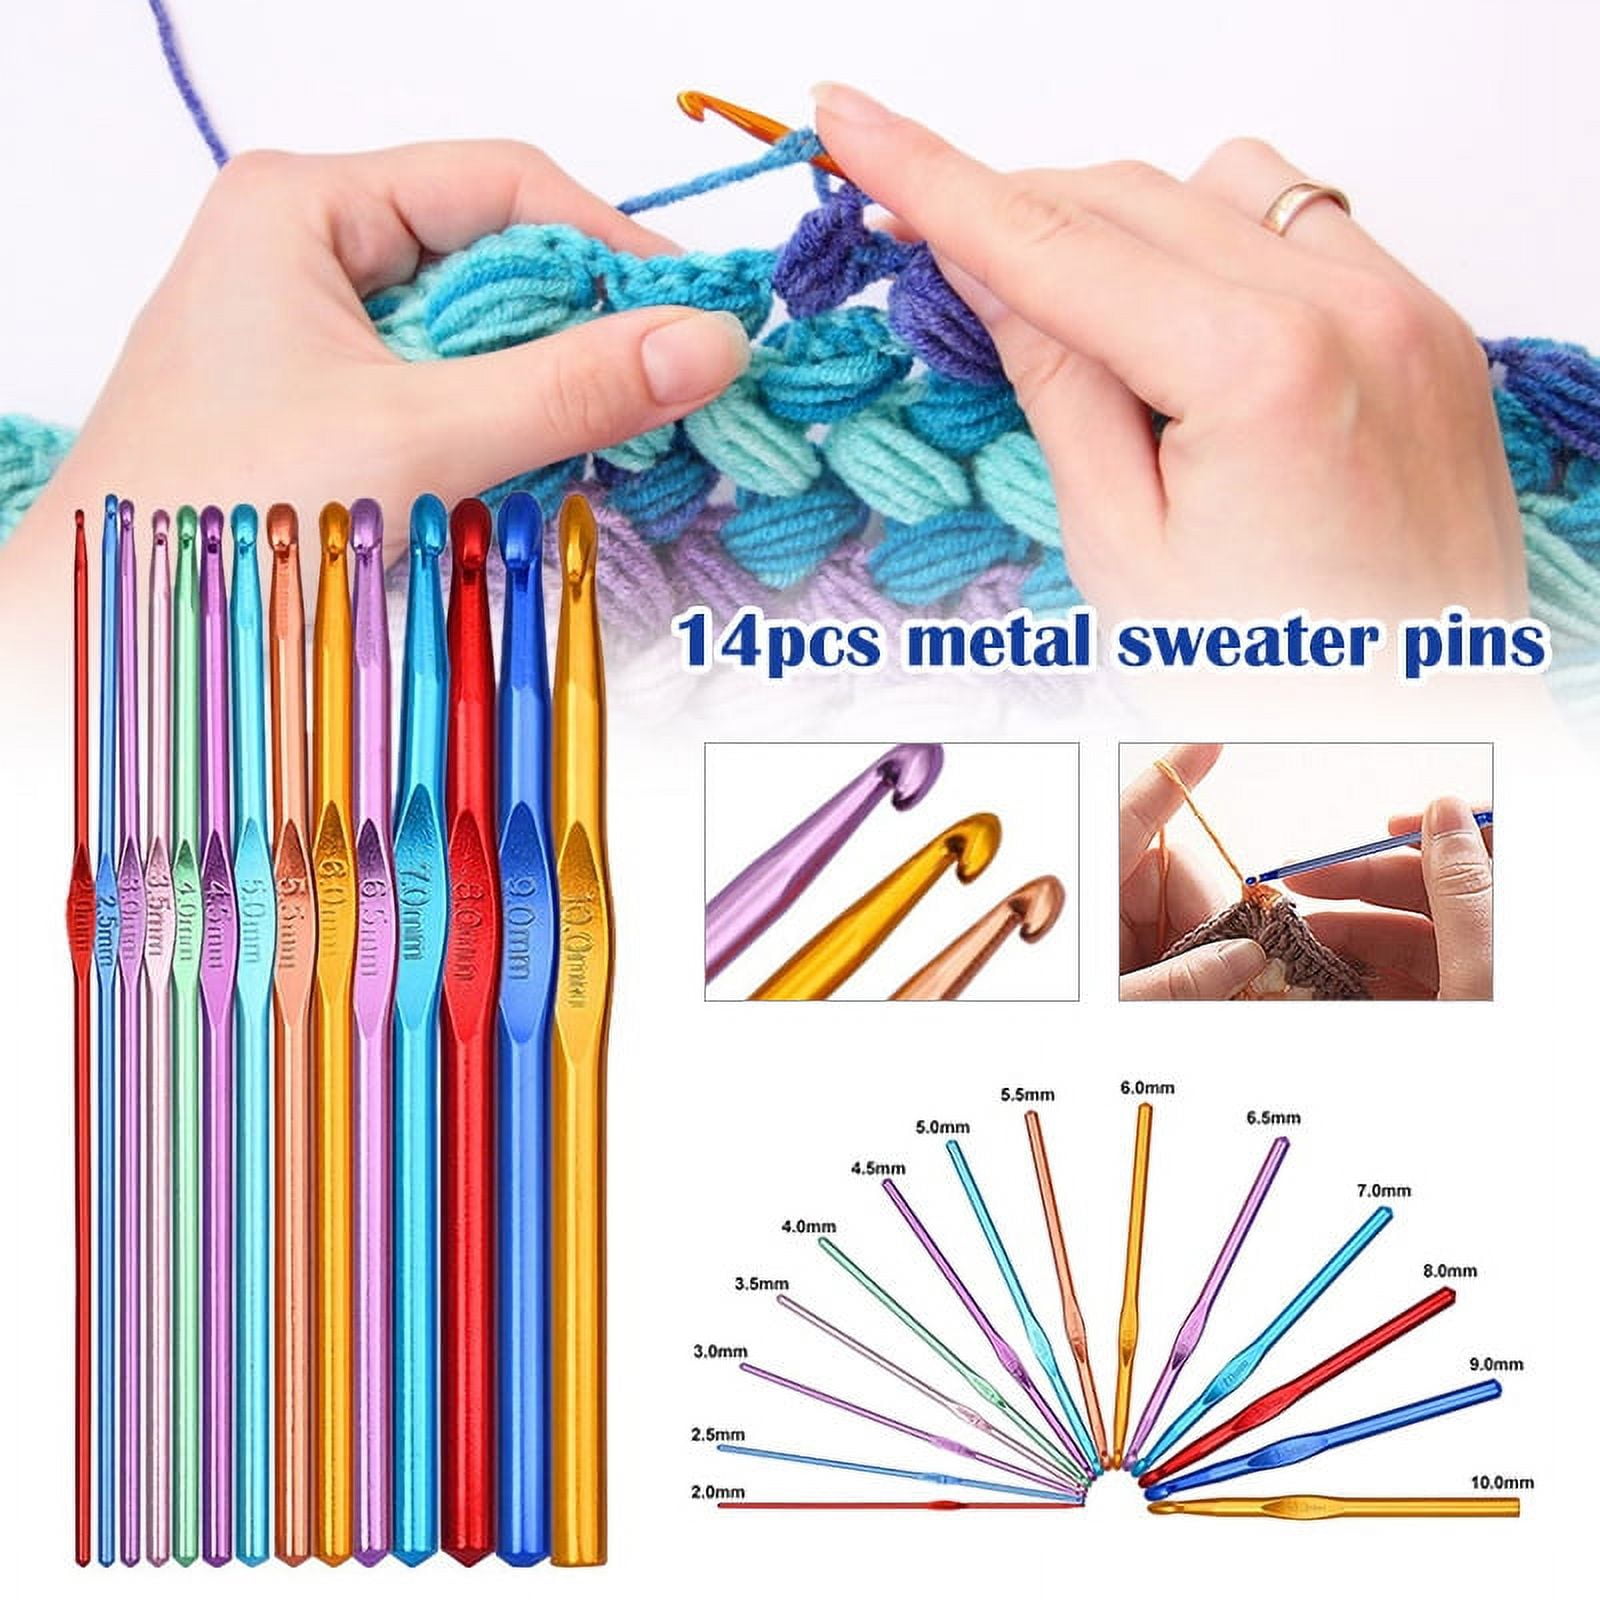 14PCS Aluminum Crochet Hooks Knitting Needles Craft Yarn 2.0mm/2.5mm/3.0mm /3.5mm/4.0mm/4.5mm/5.0mm/5.5mm/6.0mm/6.5mm/7.0mm/8.0mm/9.0mm/10.0mm